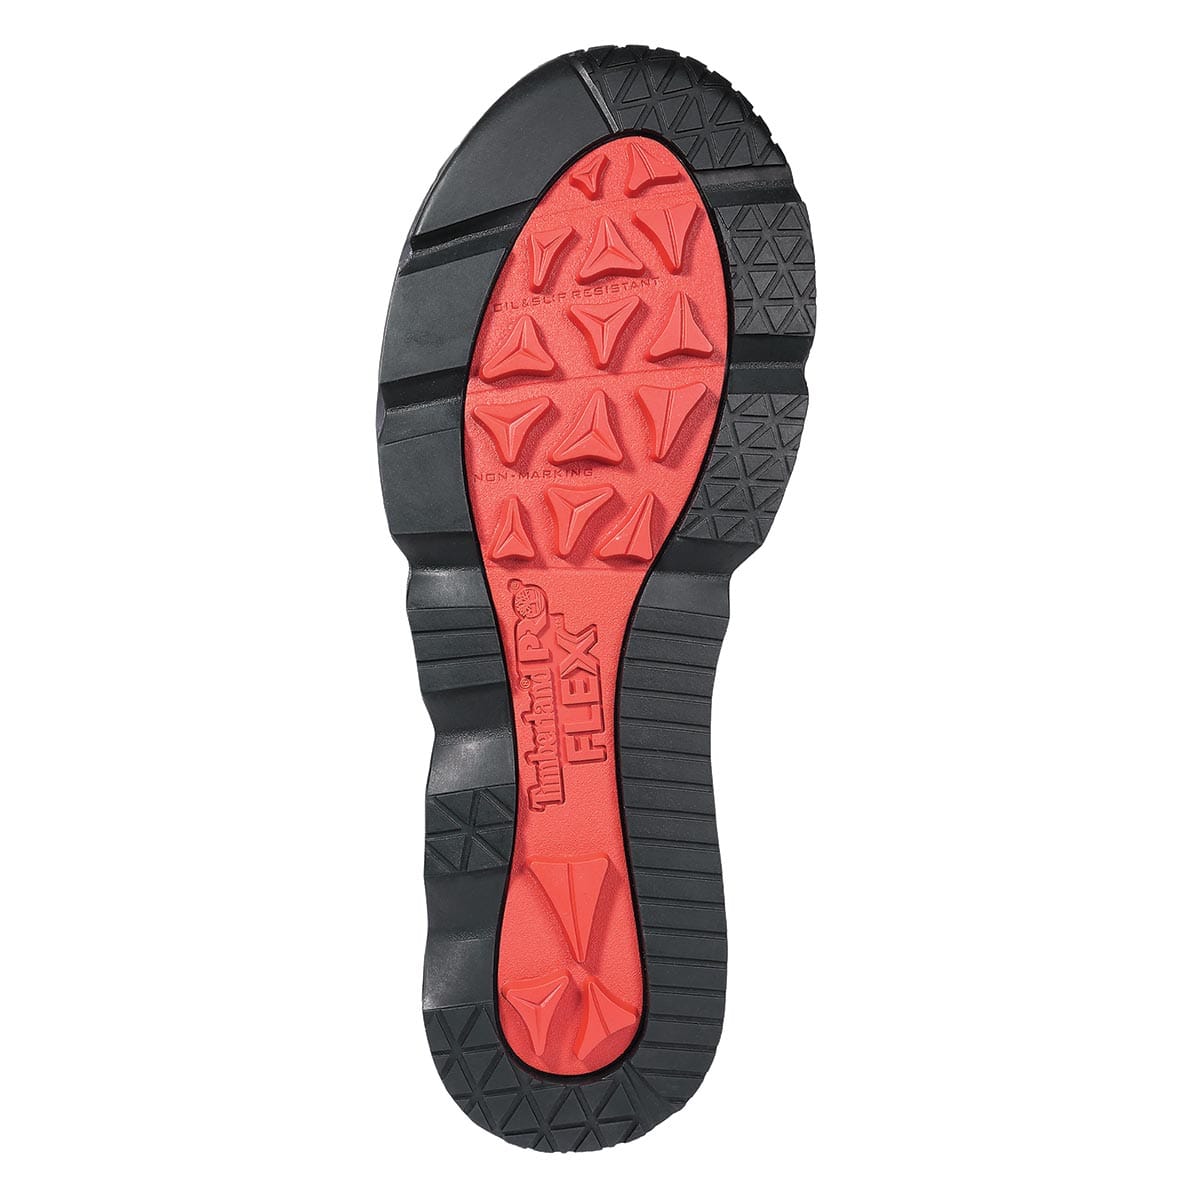 Timberland PRO Morphix 6" Waterproof Composite Toe Boots